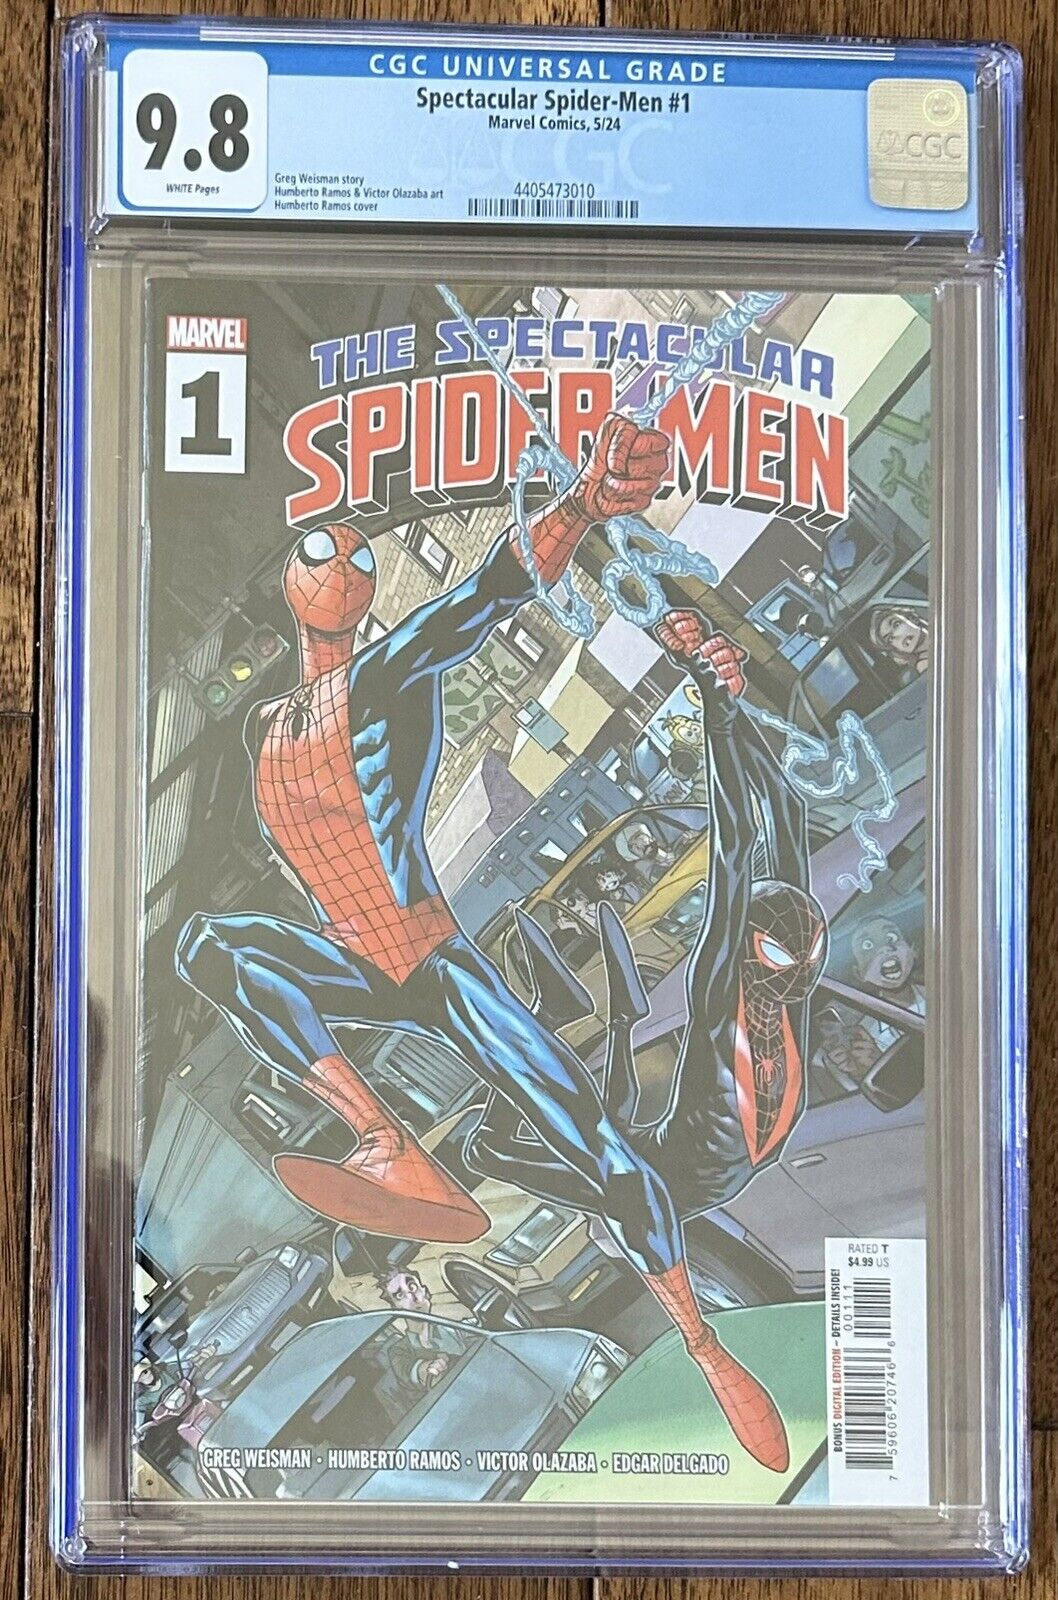 Spectacular Spider-Men #1 - Miles Morales/Peter Parker - Marvel 2024 - CGC 9.8